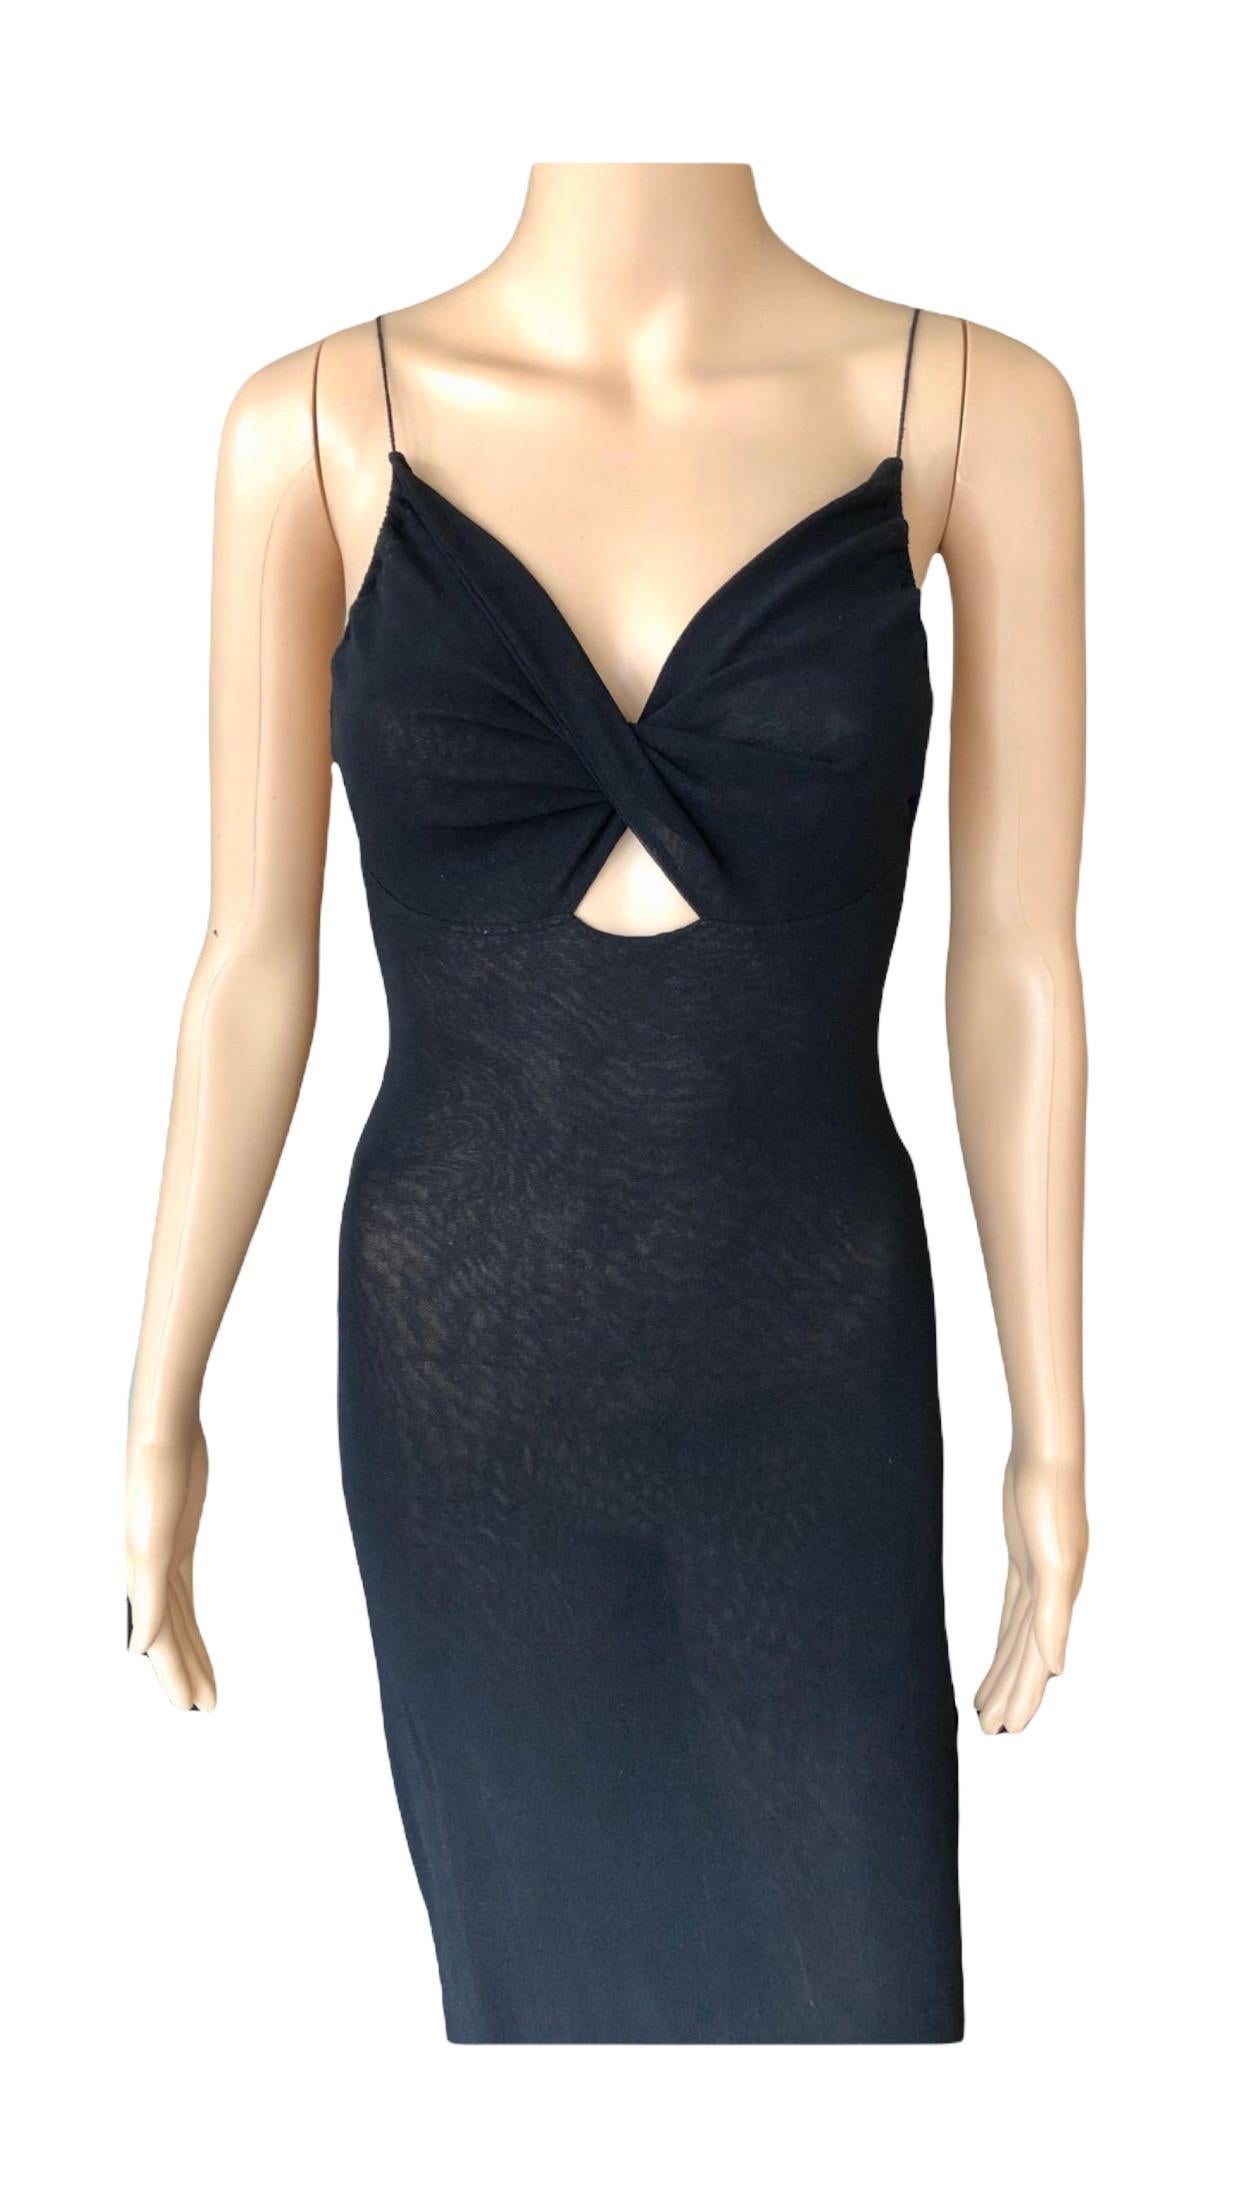 Jean Paul Gaultier Soleil S/S 1999 Cutout Semi-Sheer Mesh Black Maxi Dress For Sale 5